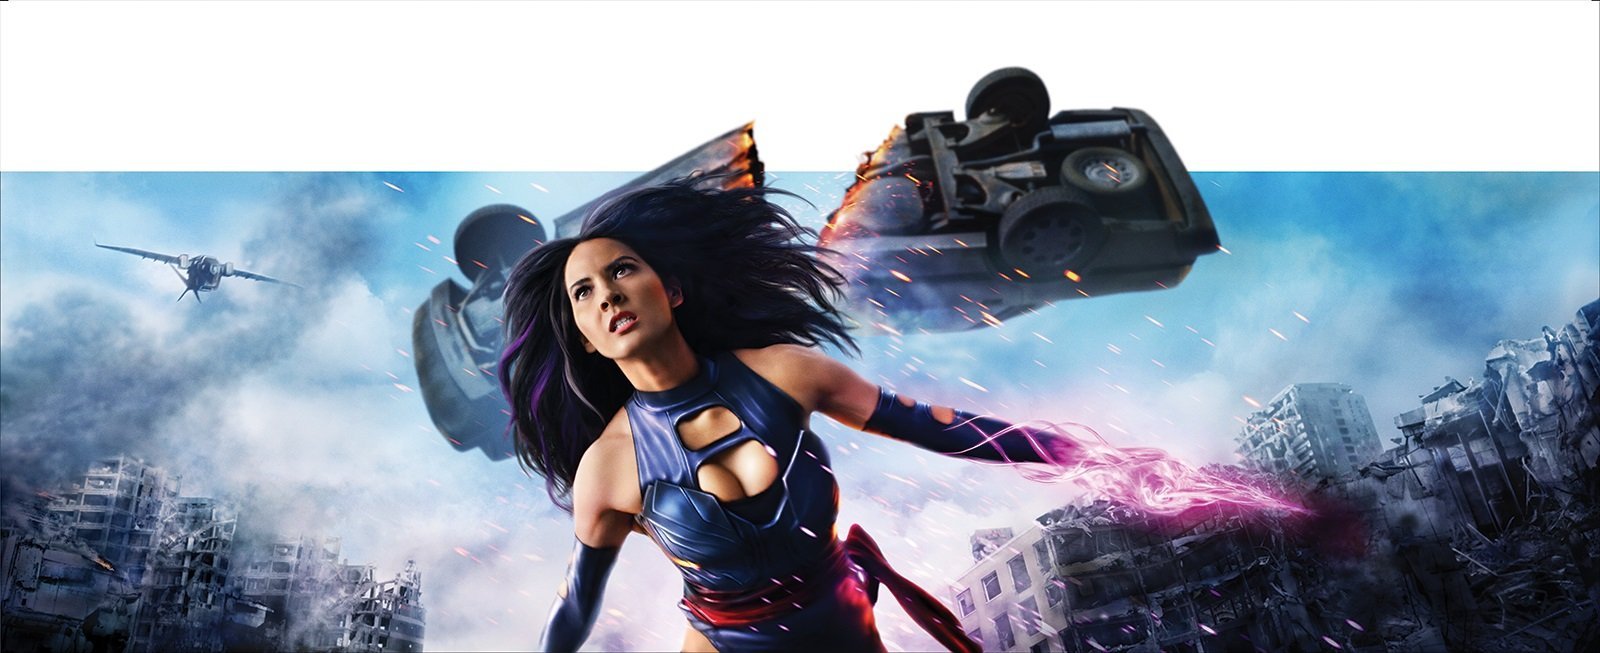 Bannière du film X-Men: Apocalypse avec Psylocke